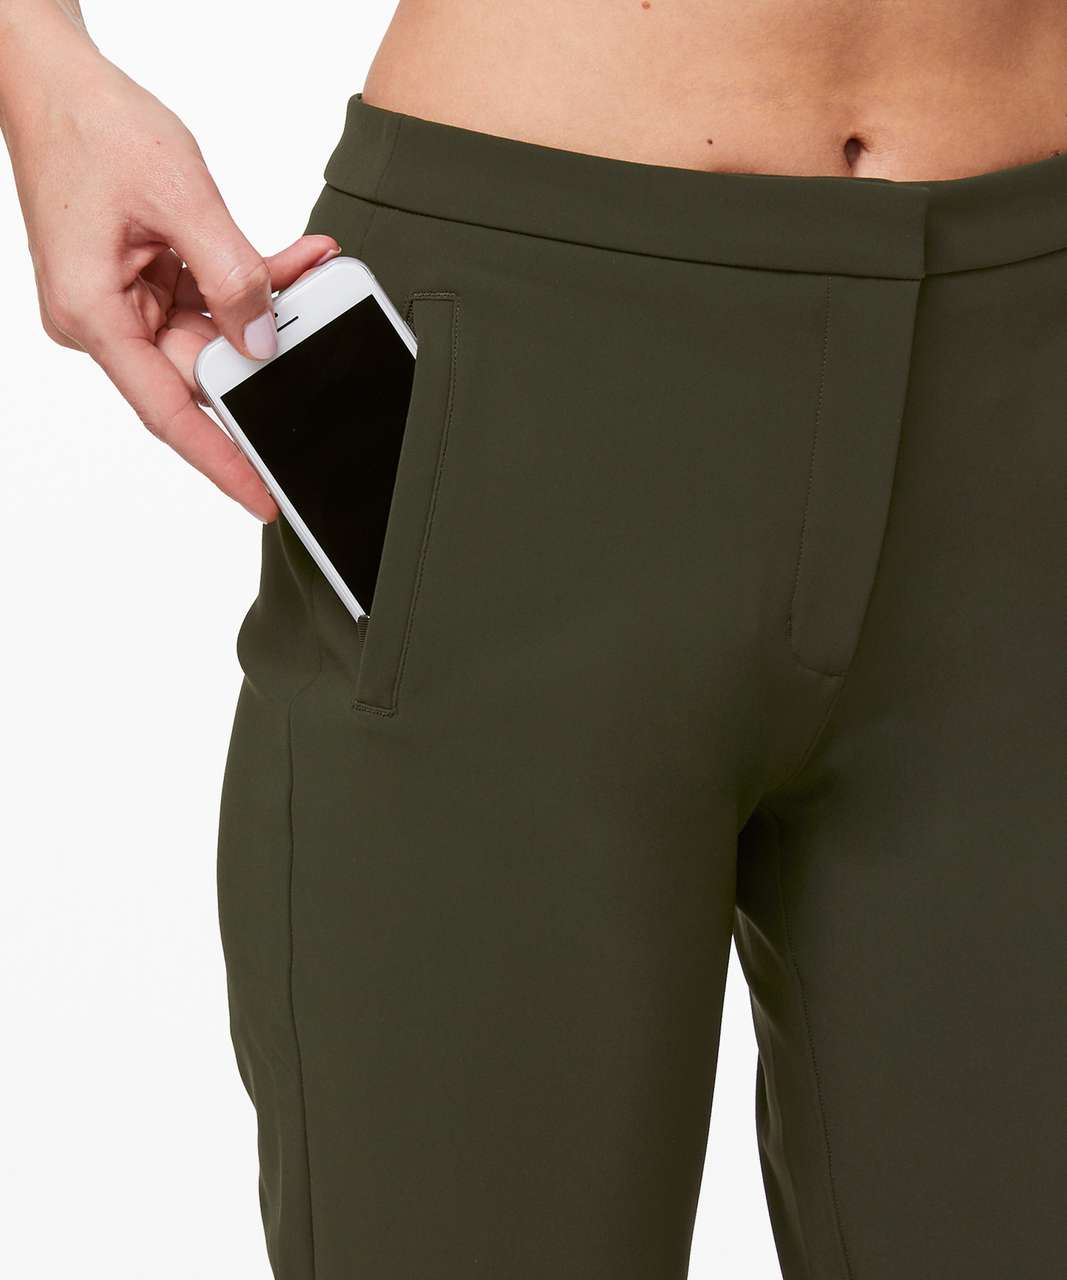 Lululemon On The Move Pants Work Pants Olive green Women’s Size 6 Tech Crop  